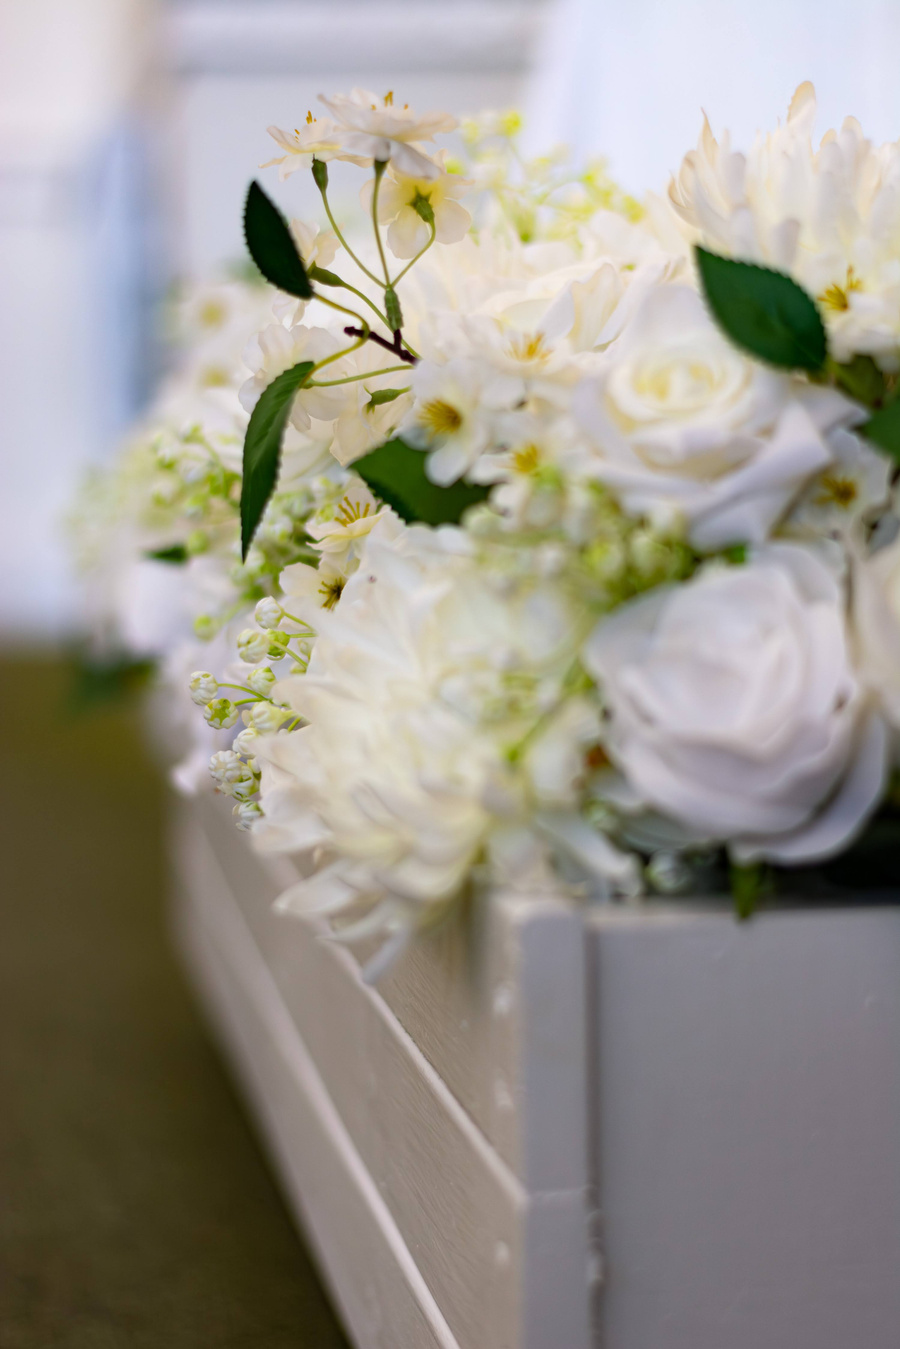 a luxurious white wedding flower arrangement in a wooden box